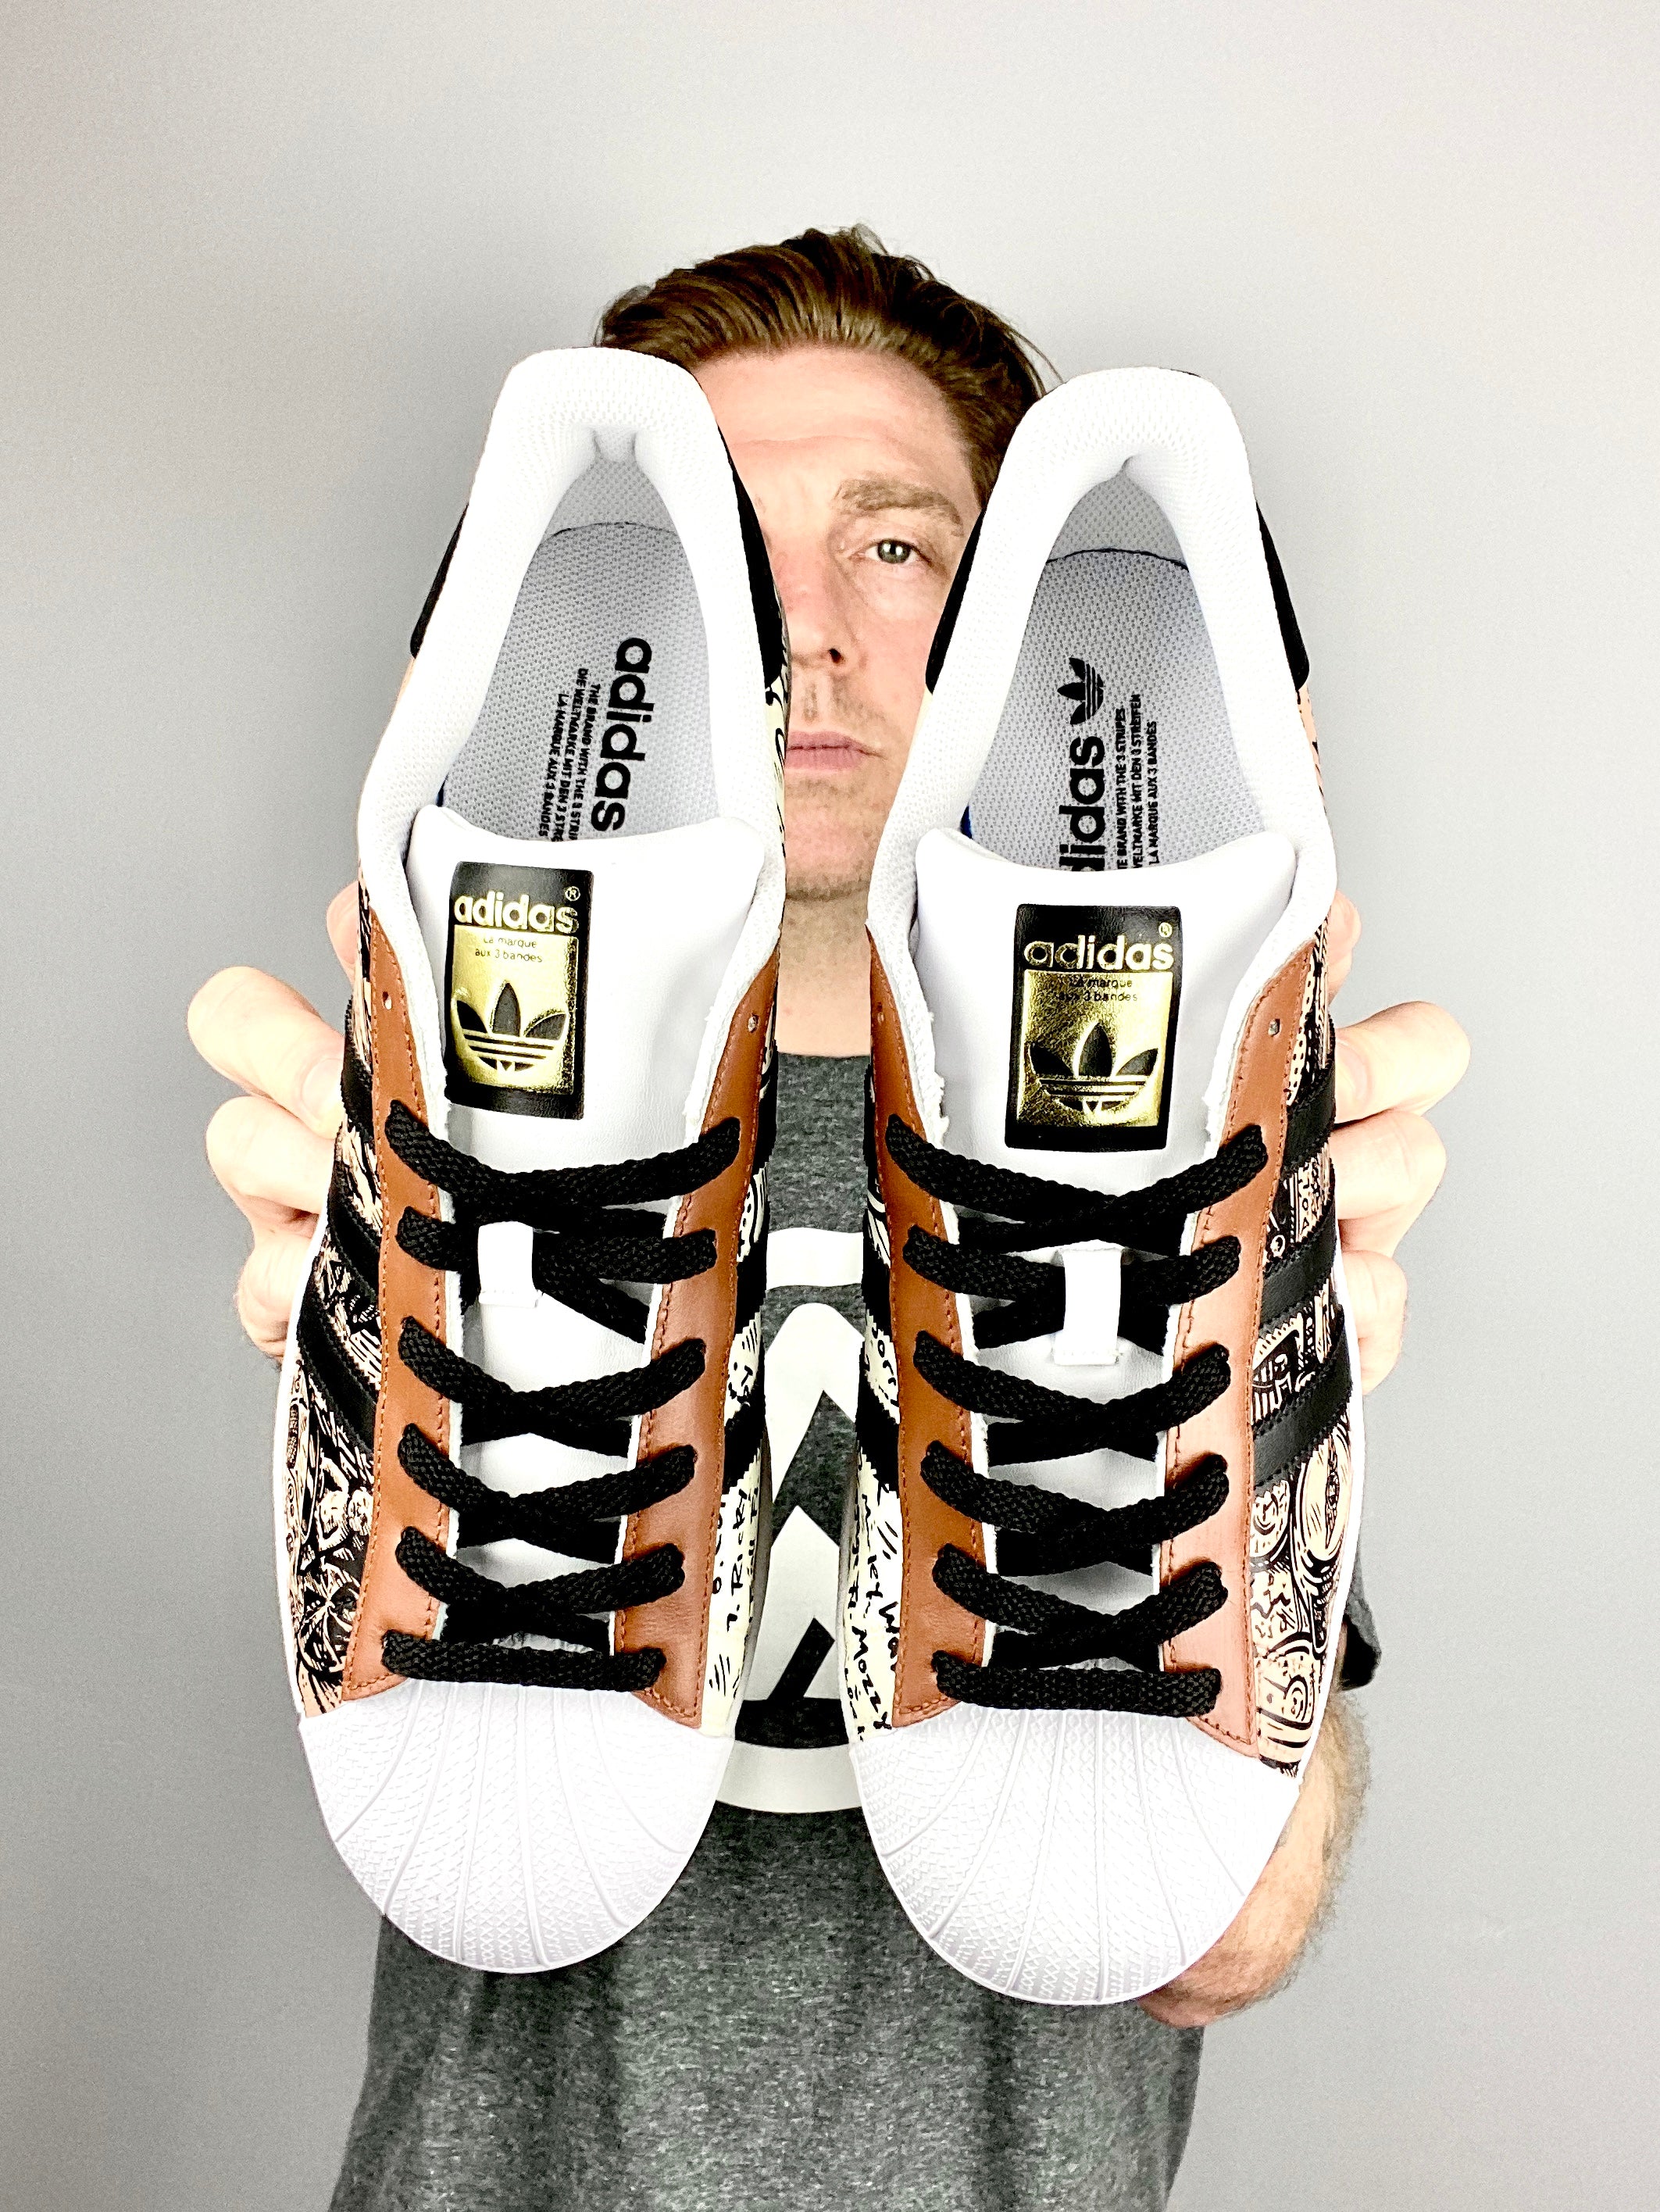 Damian Lillard Adidas Superstar shoes chadcantcolor